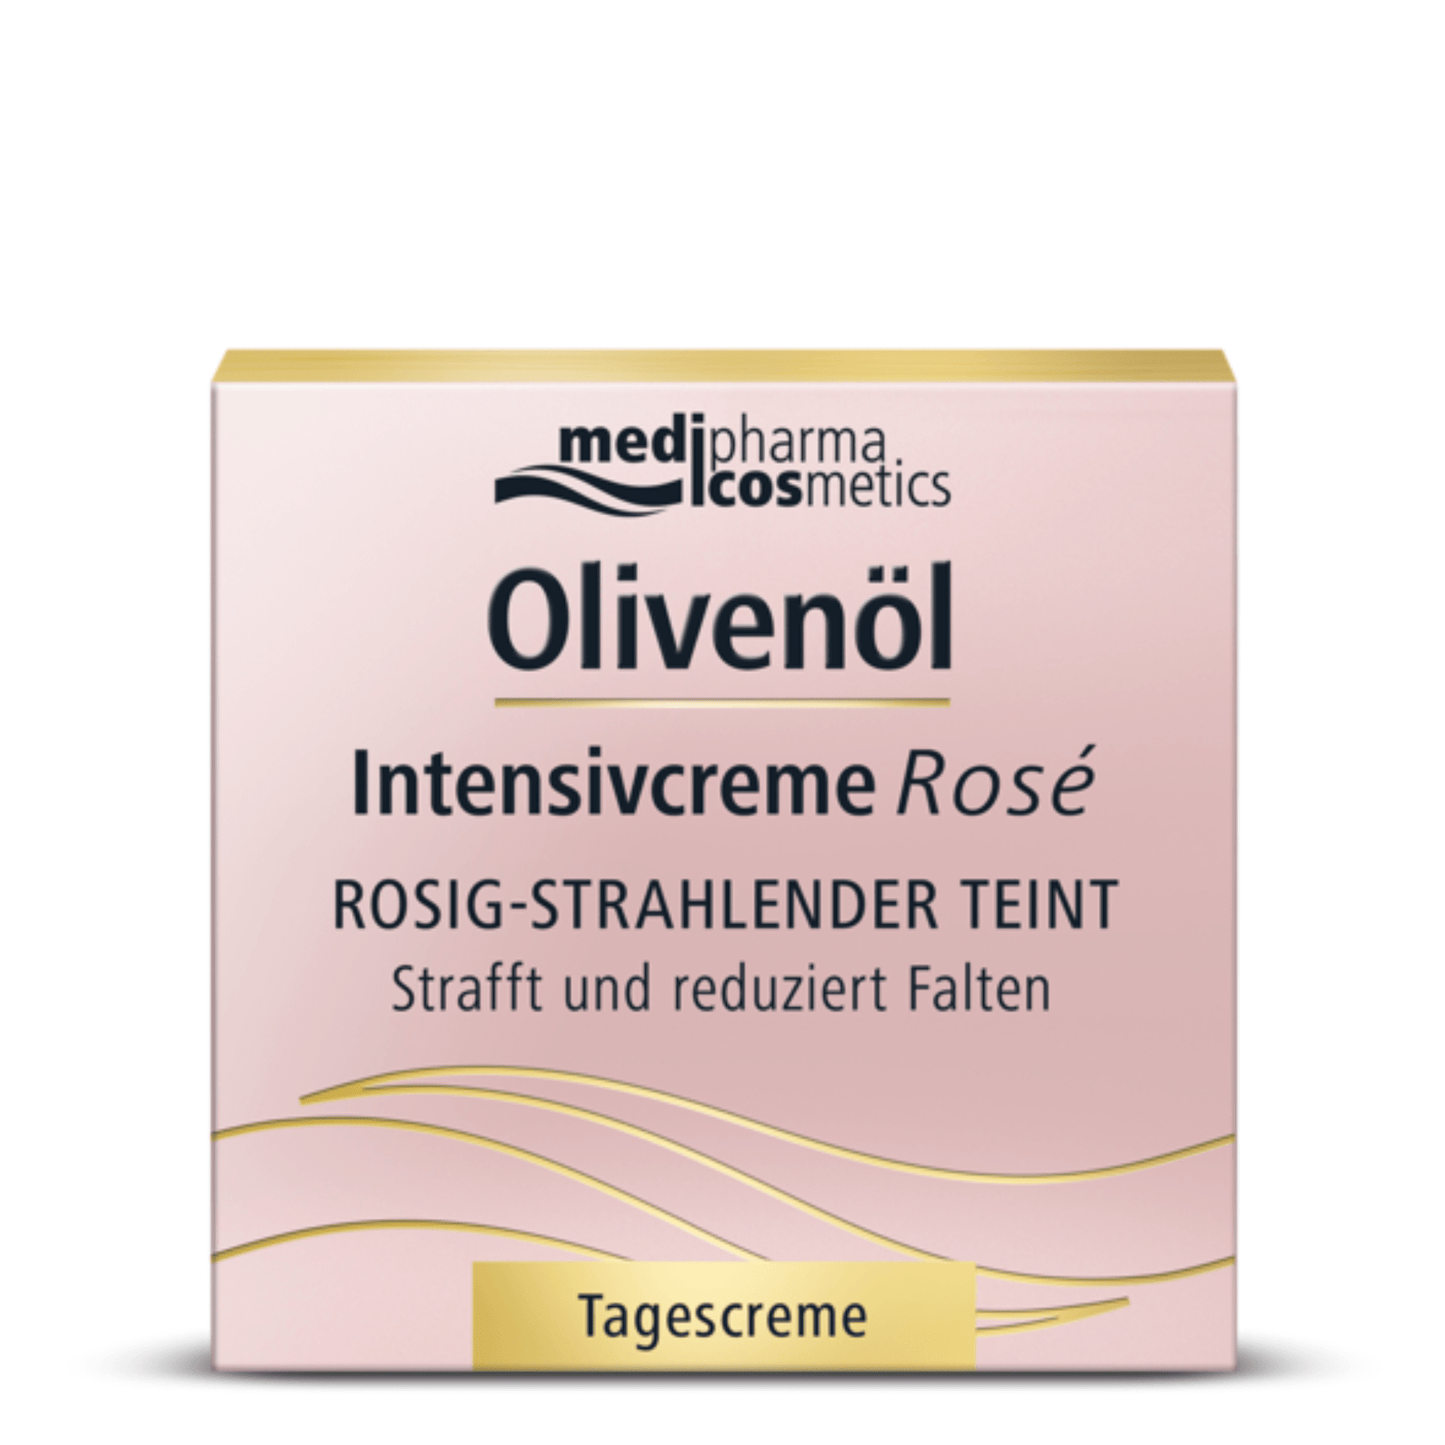 Alternate Image of Olivenol Intensivcreme Rose Tagescreme